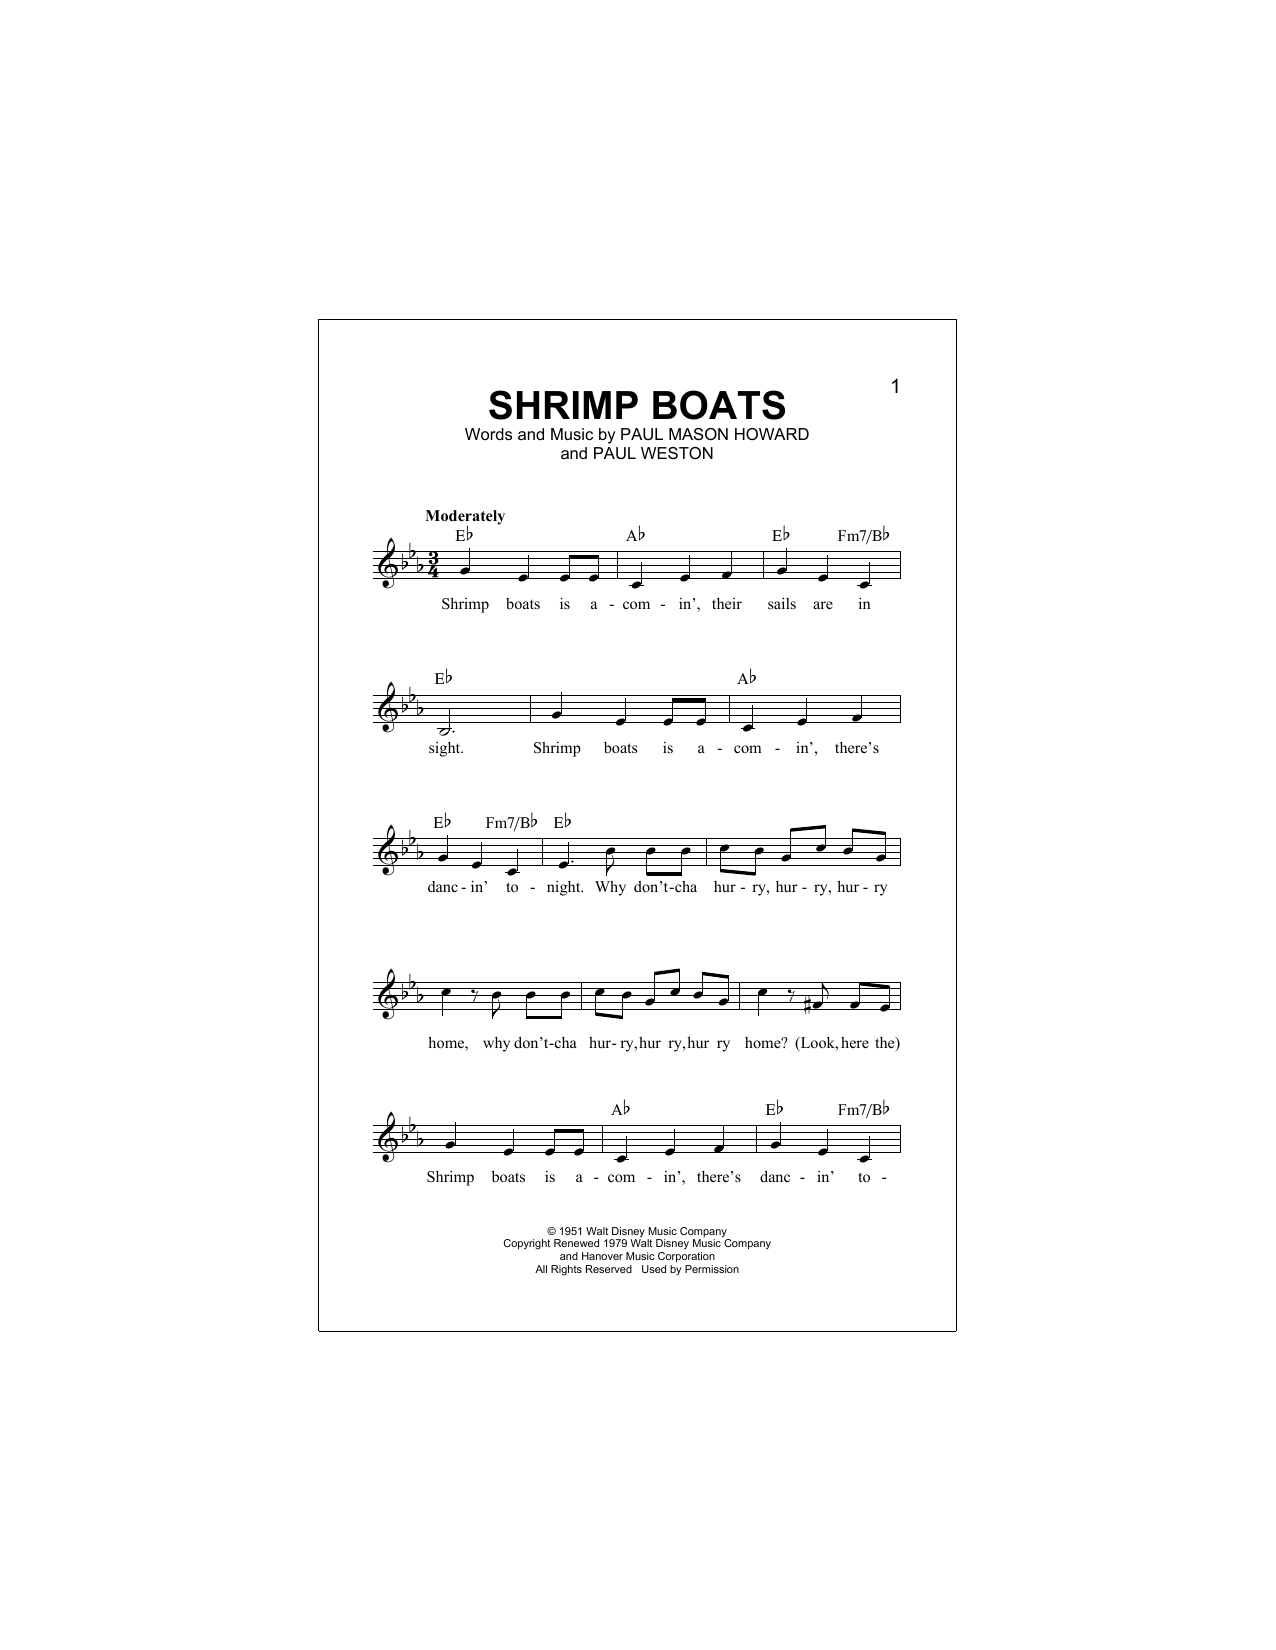 Paul Mason Howard Shrimp Boats Sheet Music Notes & Chords for Melody Line, Lyrics & Chords - Download or Print PDF